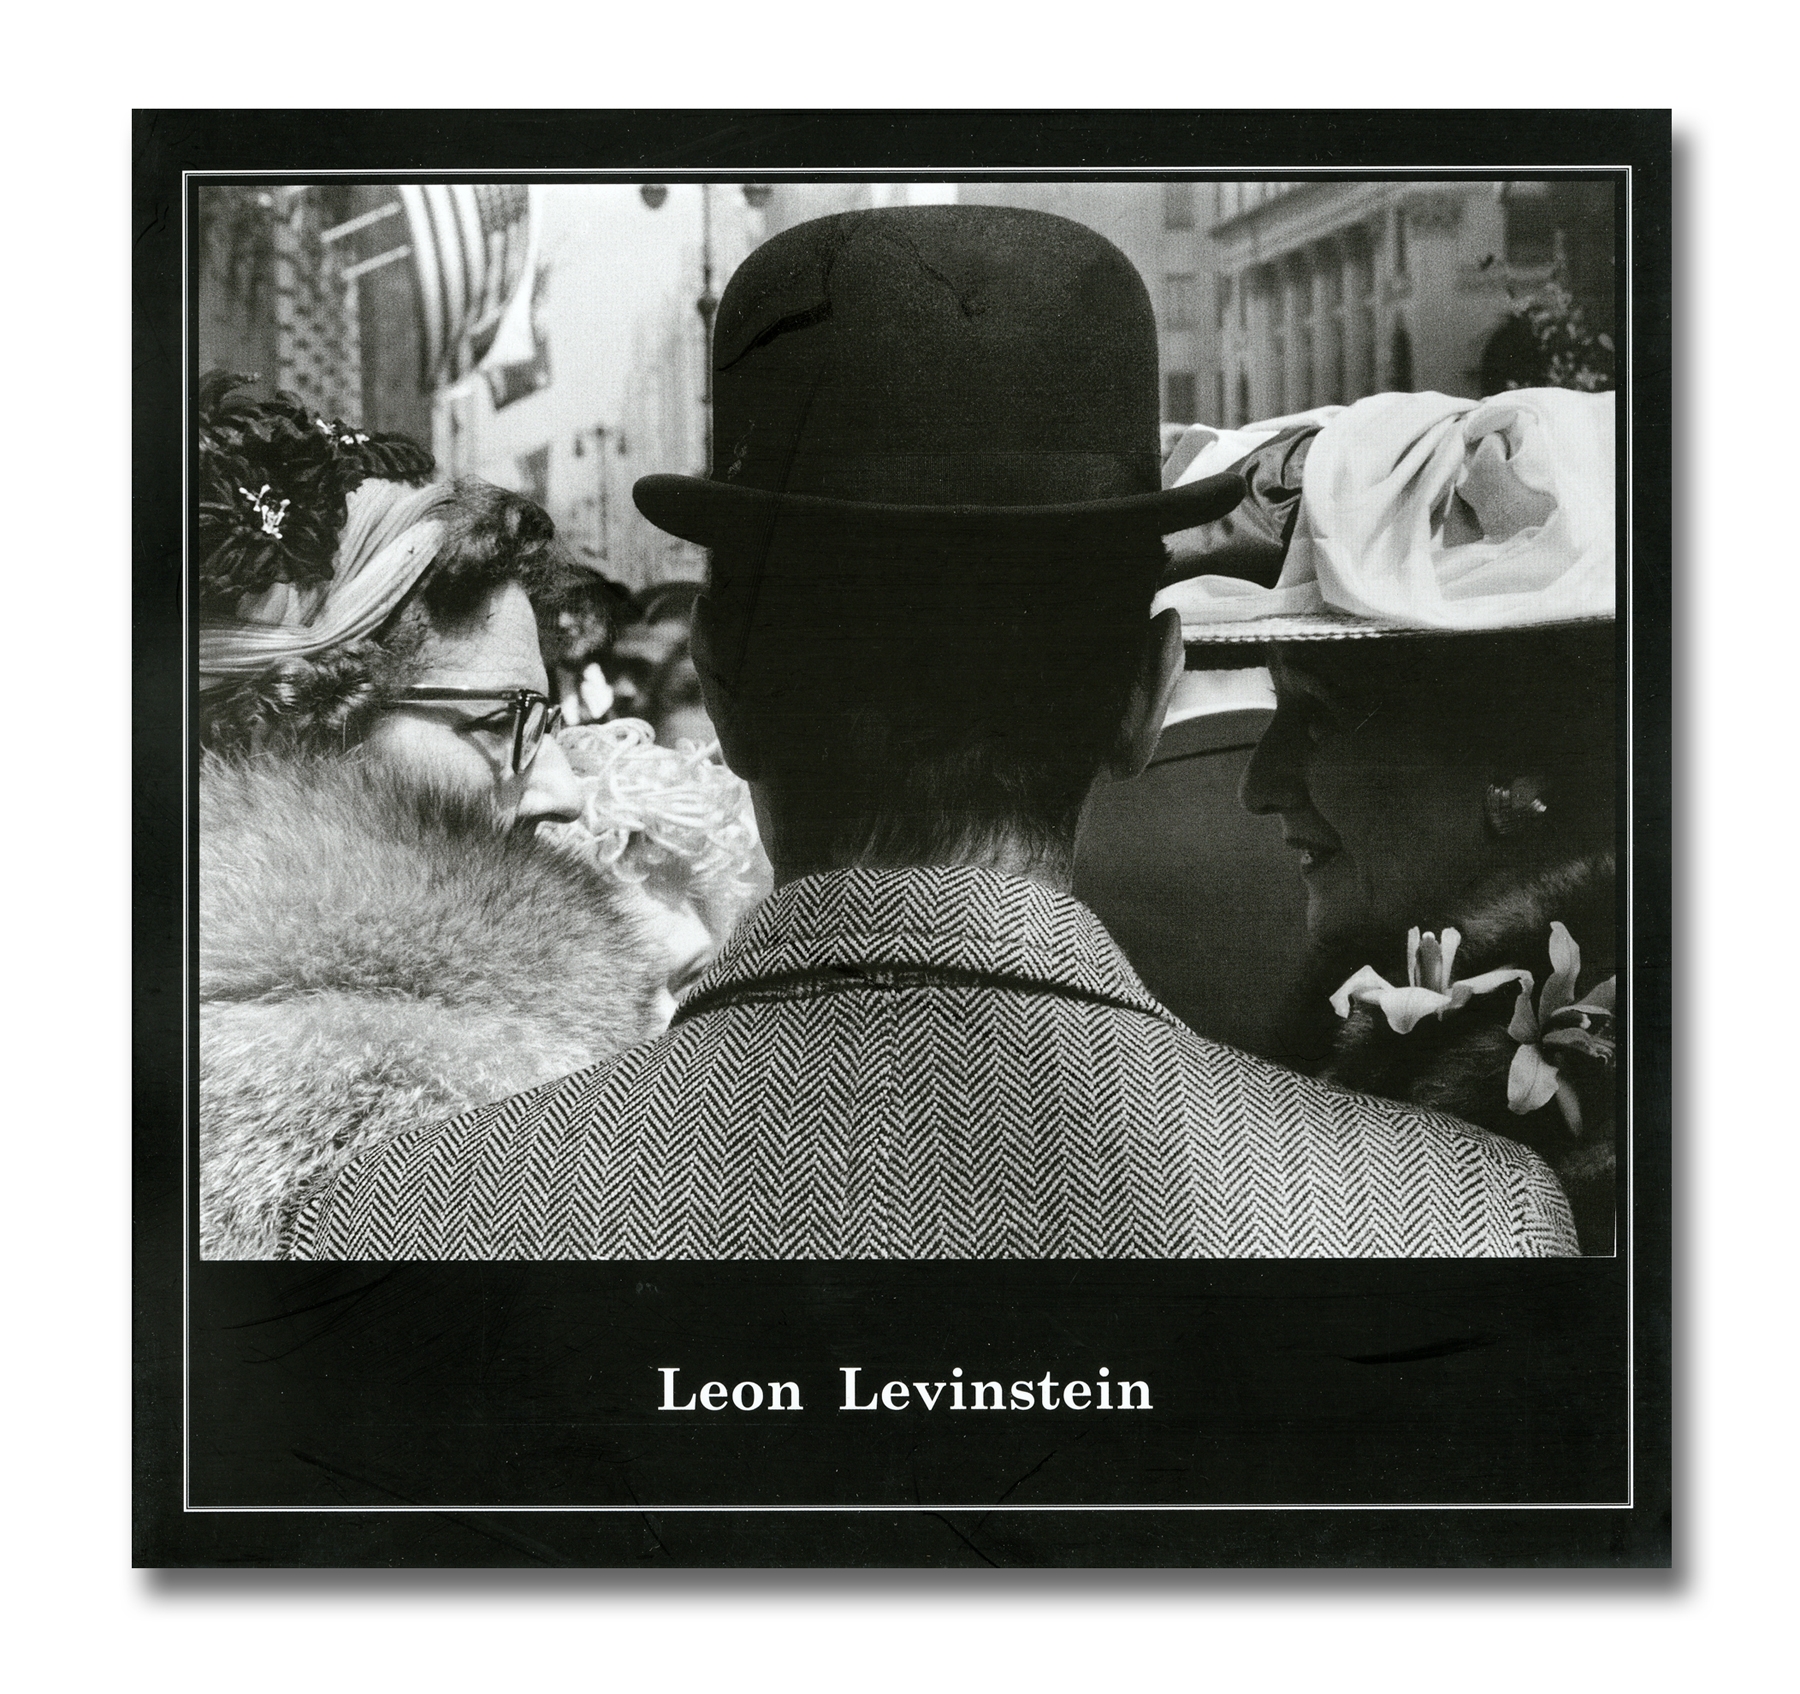 Leon Levinstein - Leon Levinstein - The Hellenic American Union - Howard Greenberg Gallery 2018